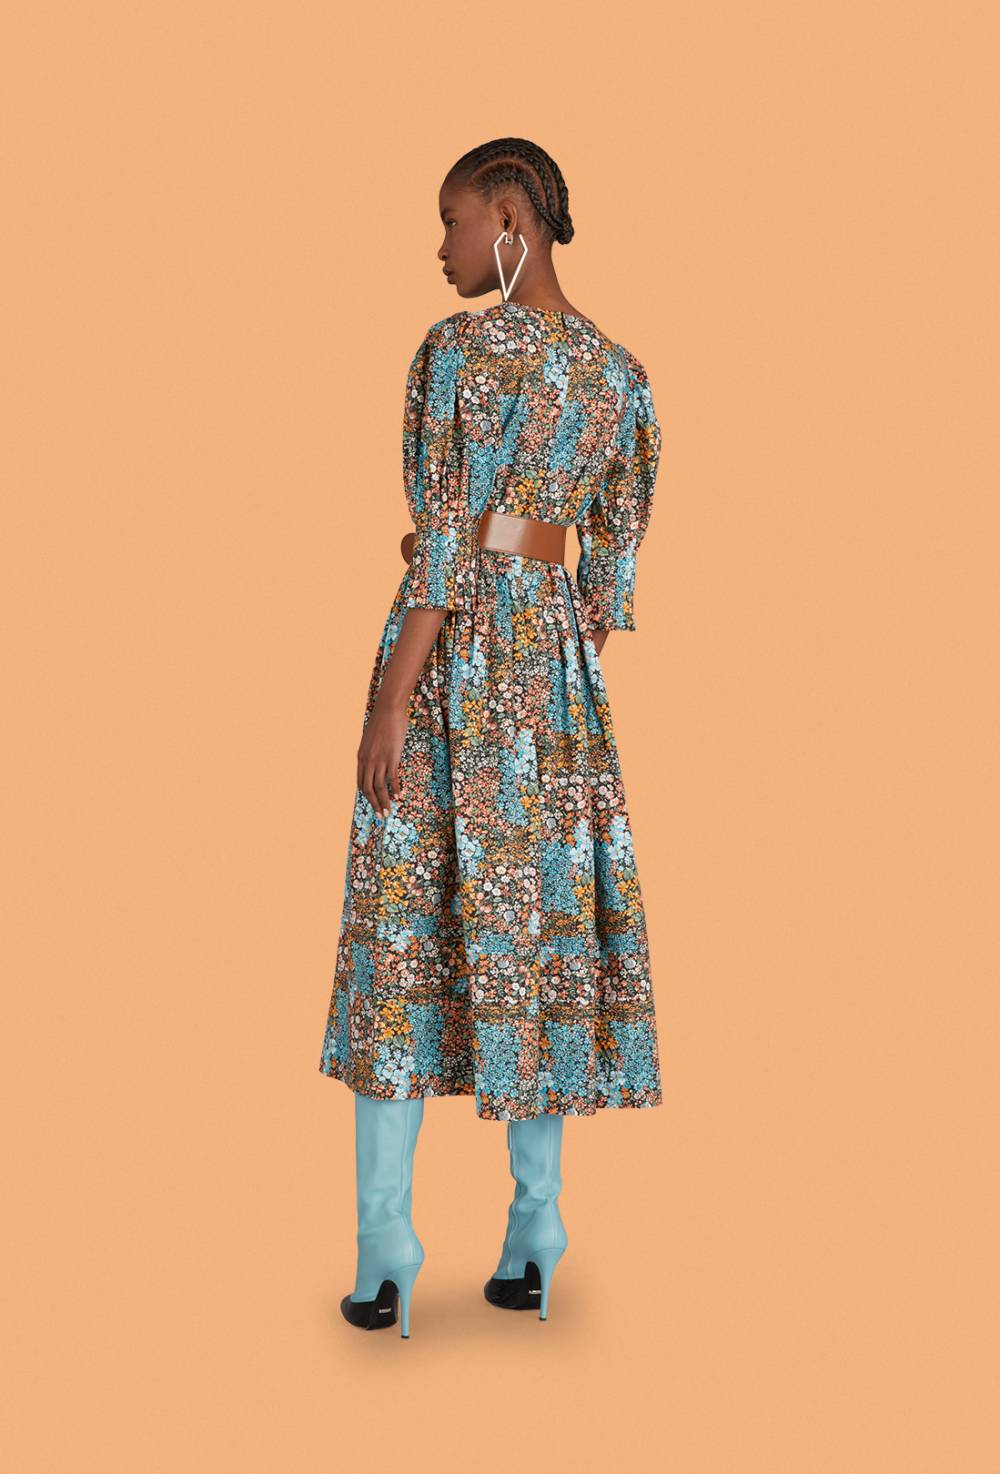 Cervinia print dress by Sea image #5